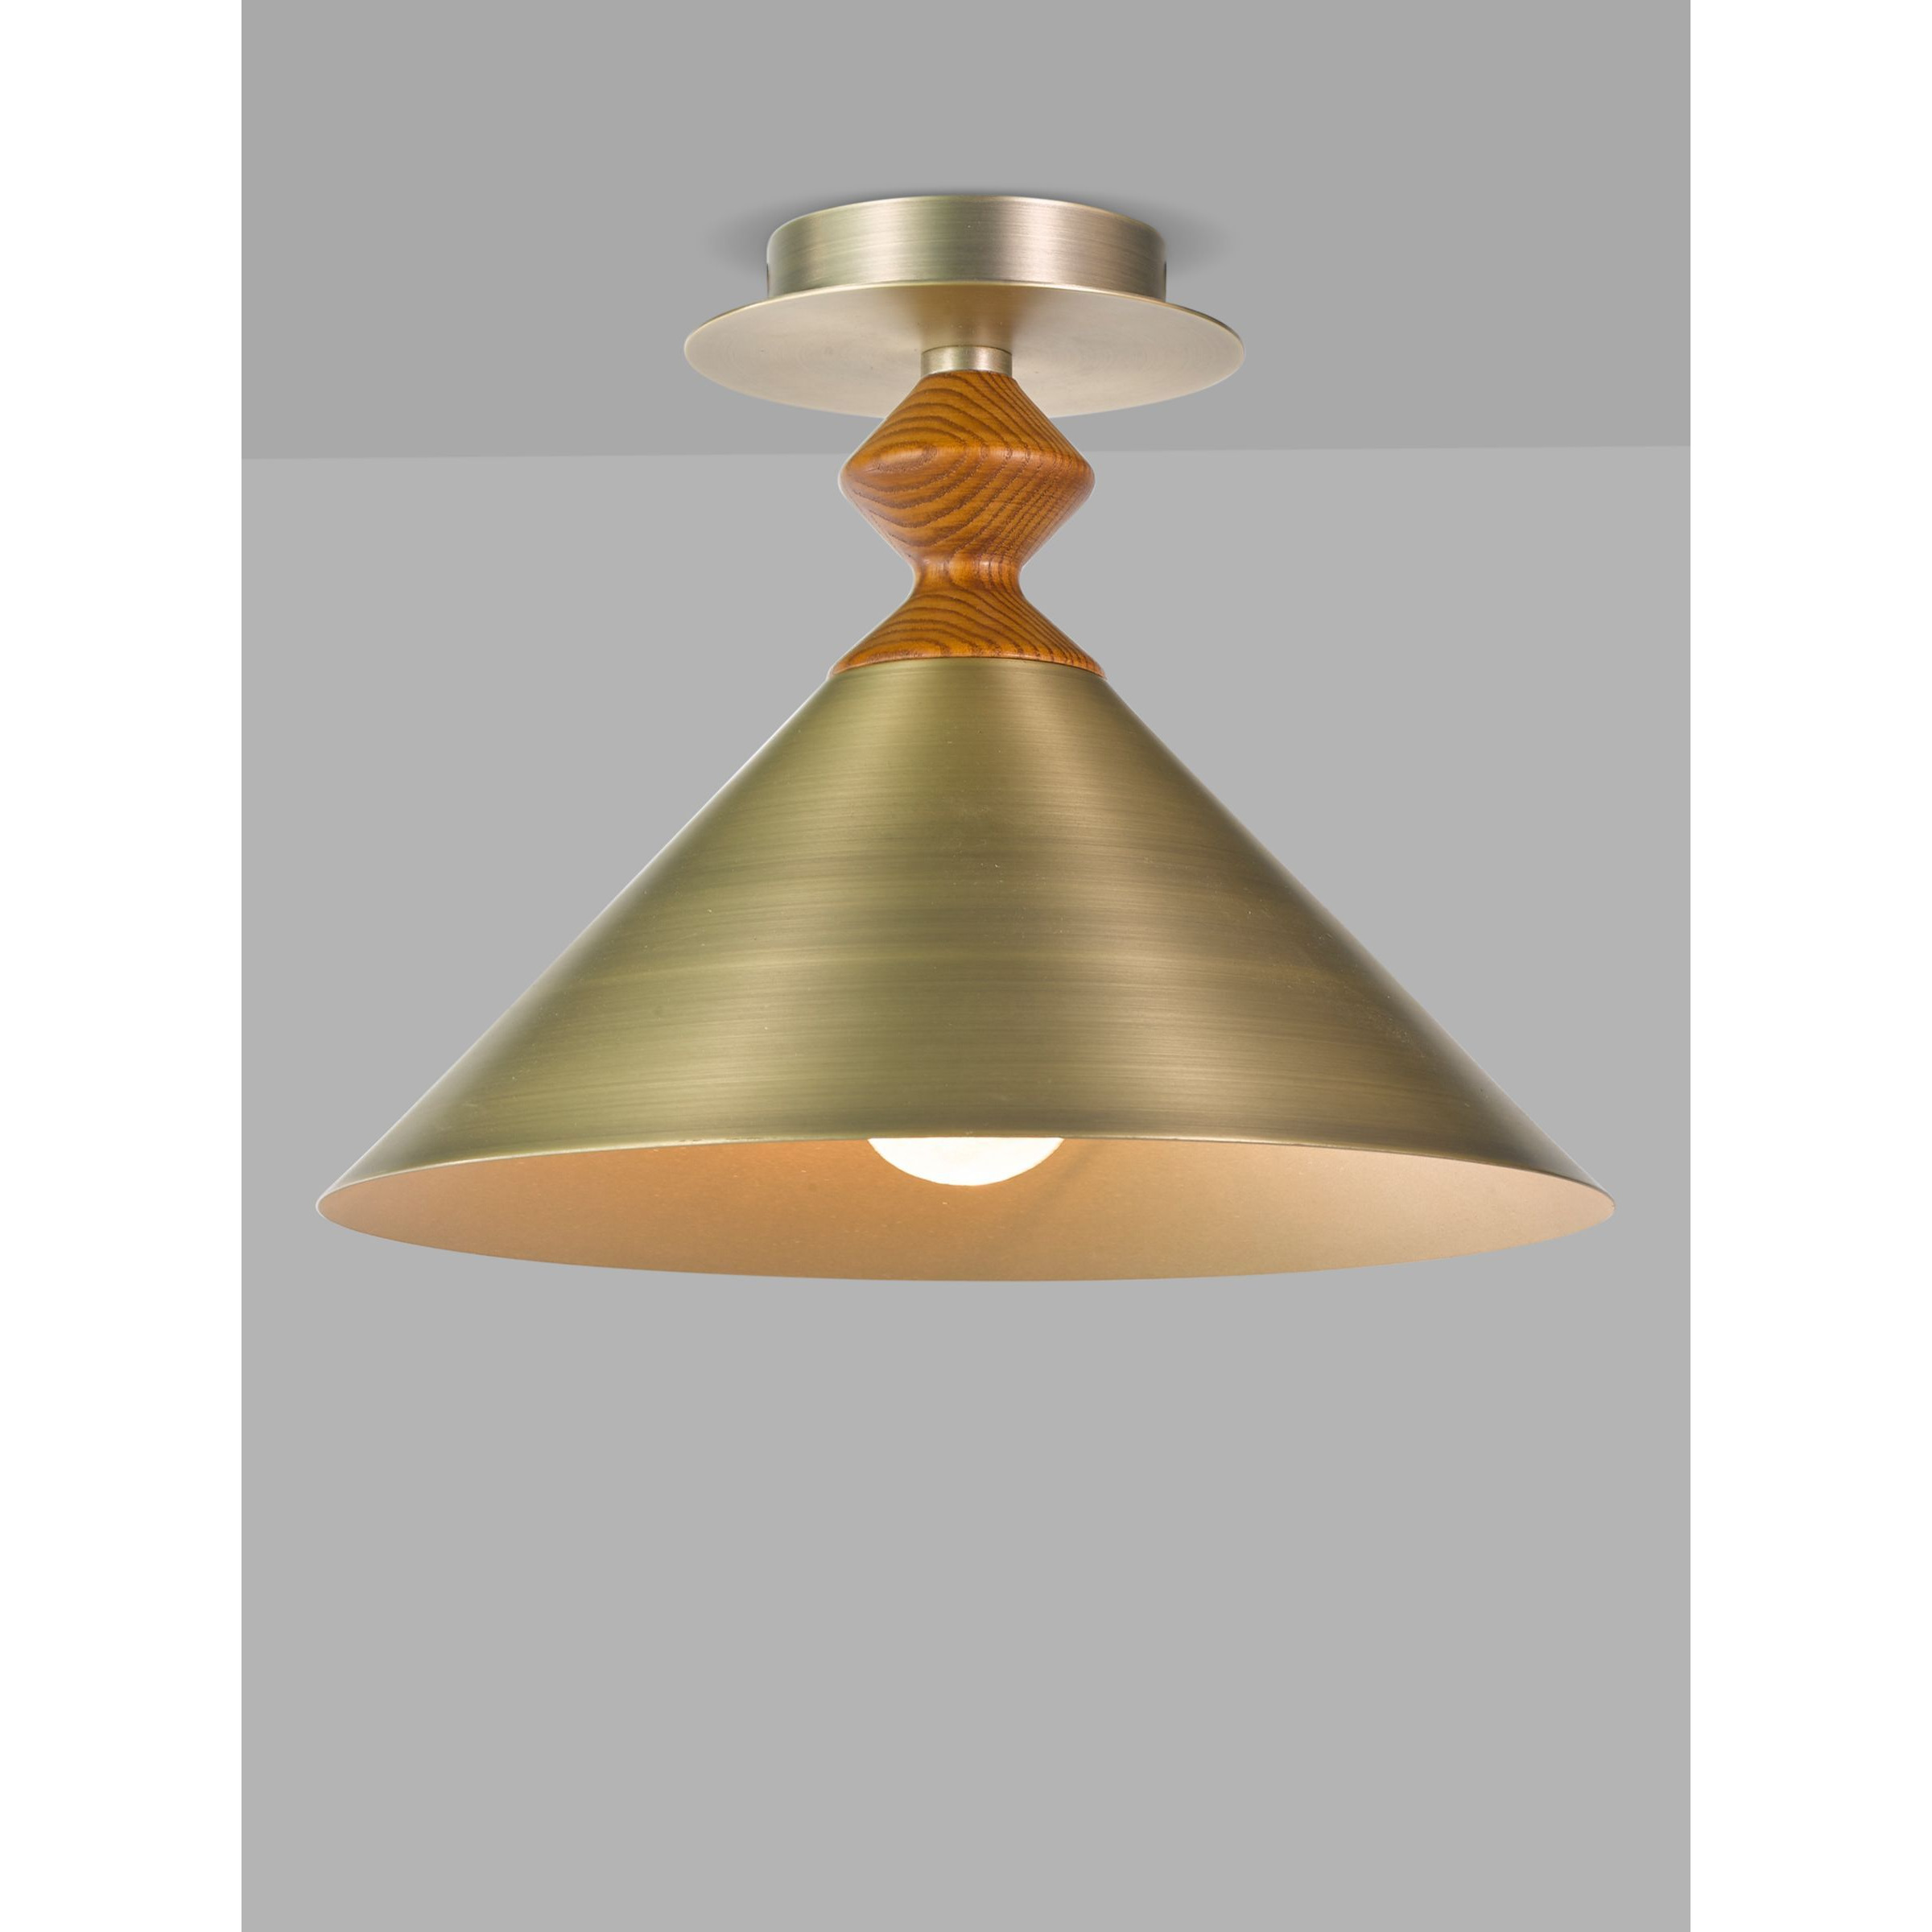 Swoon Franklin Flush Ceiling Light, Antique Brass - image 1